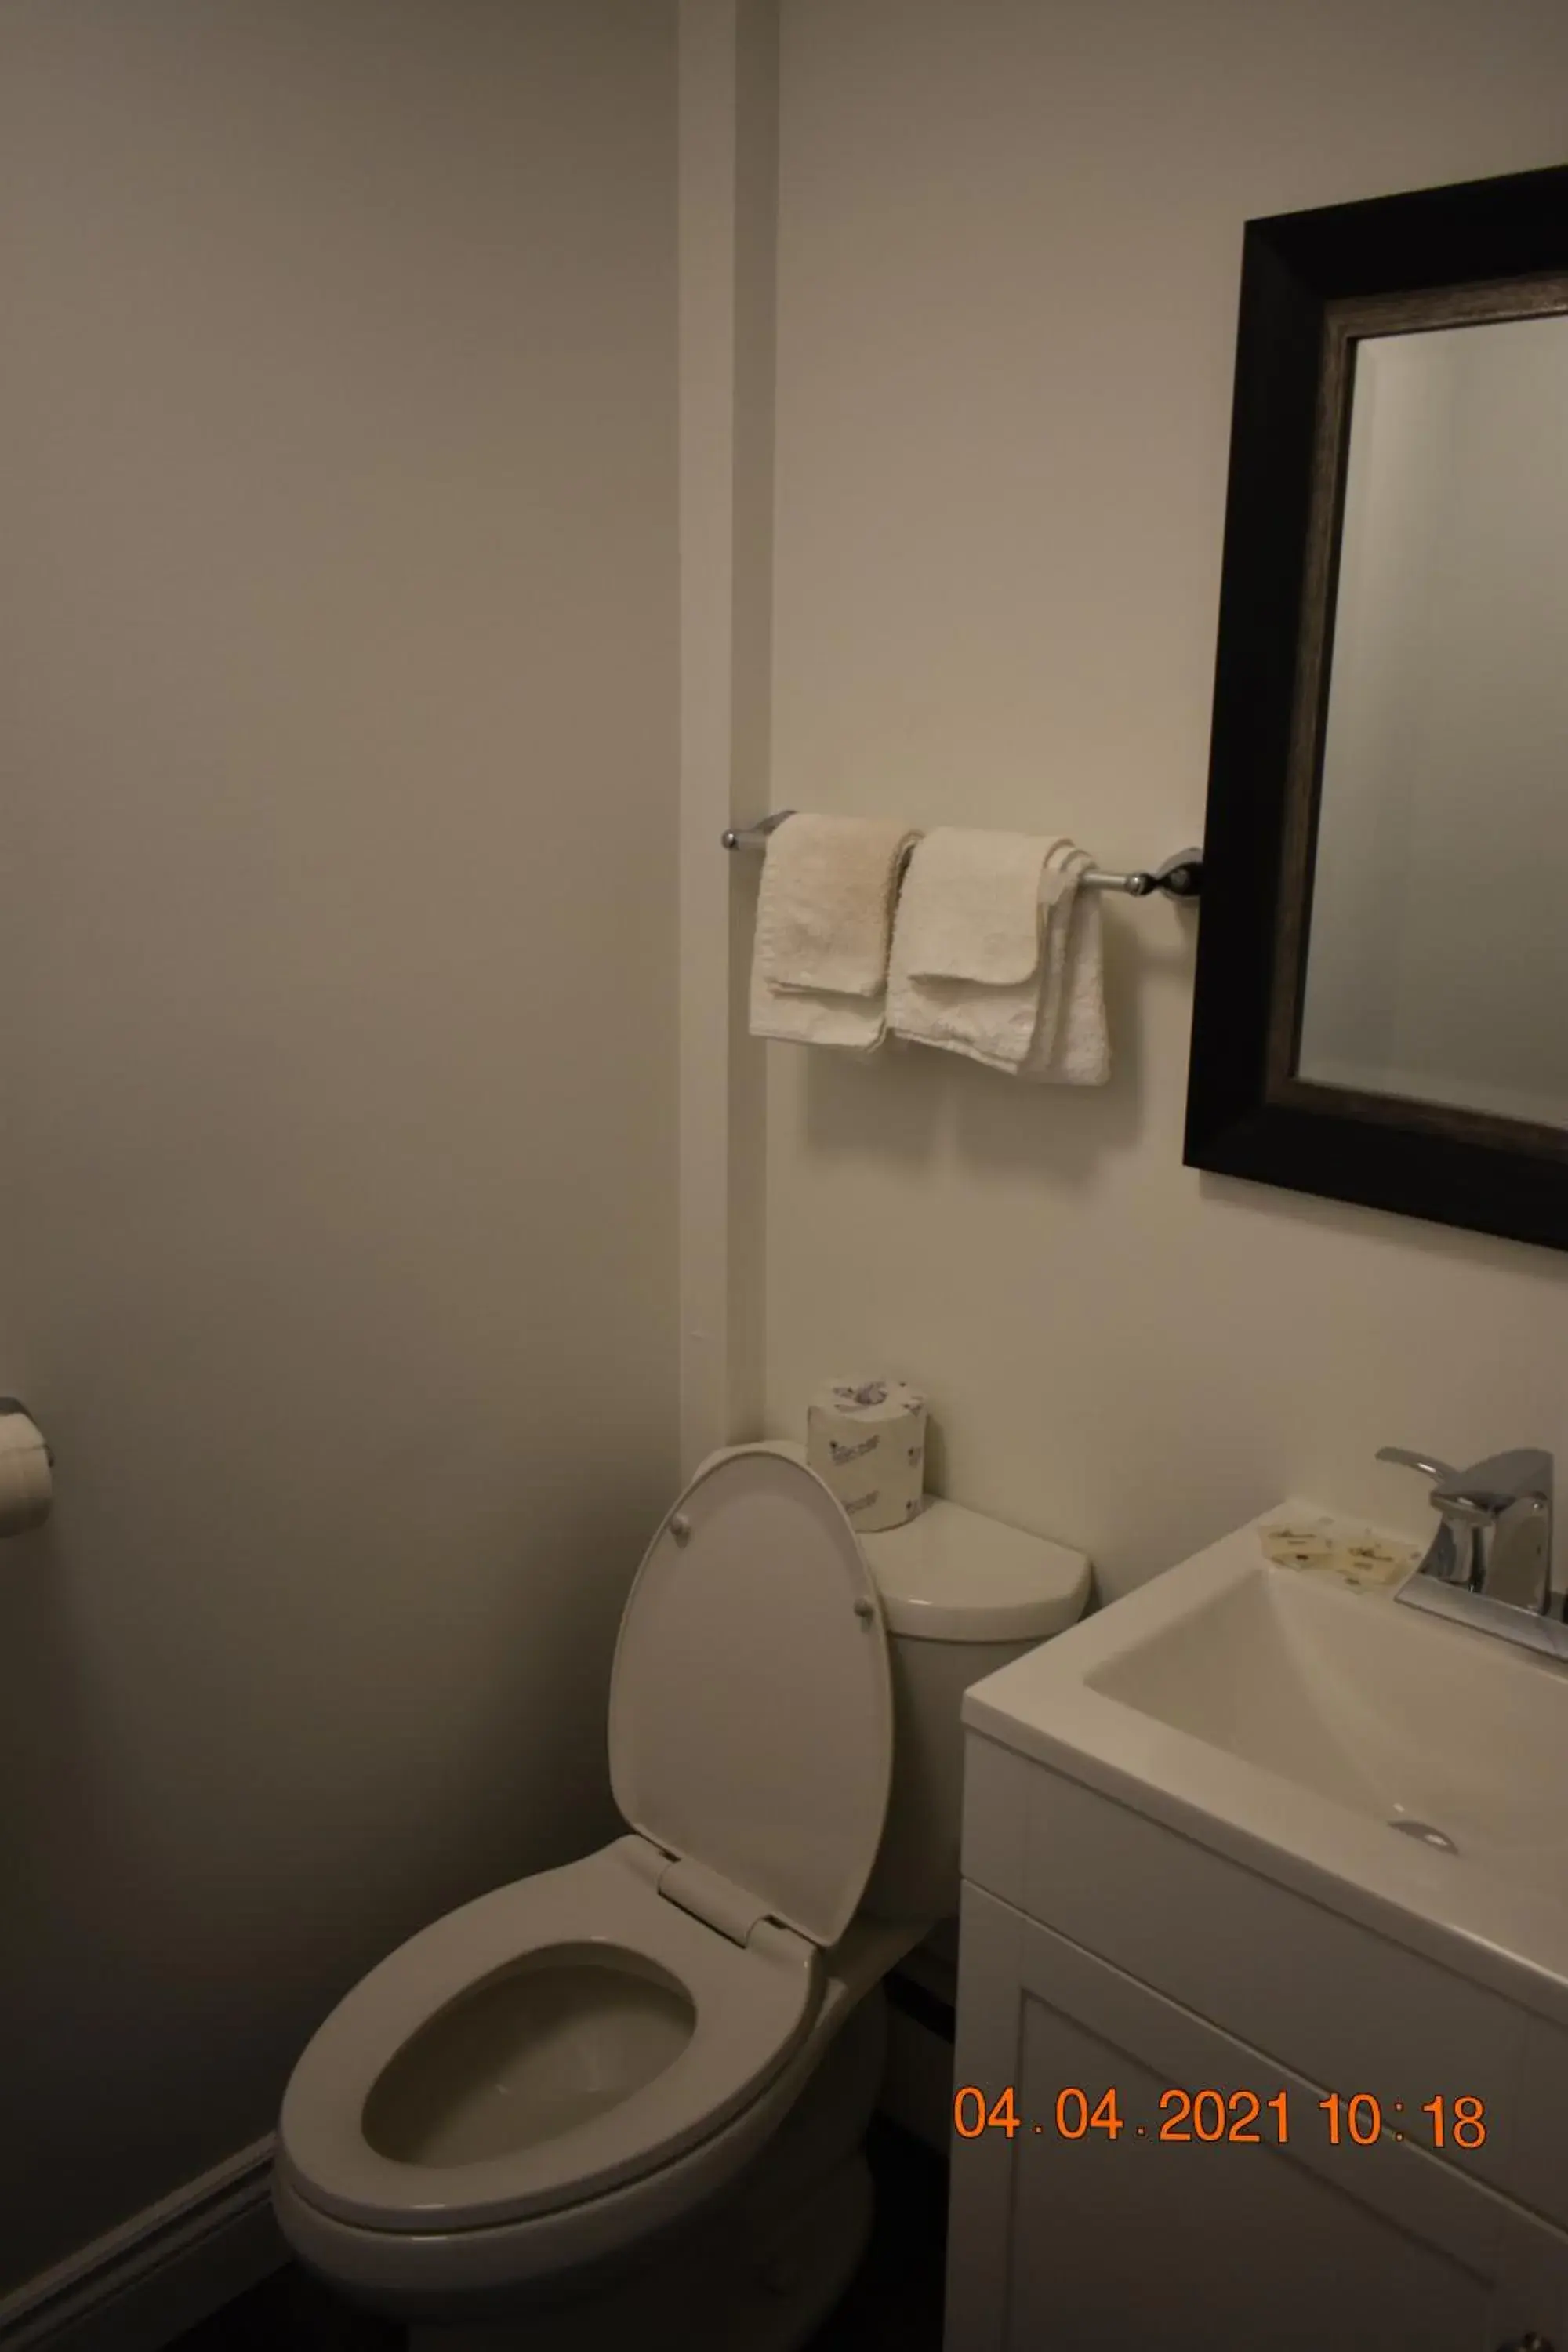 Bathroom in Time Travellers Motel